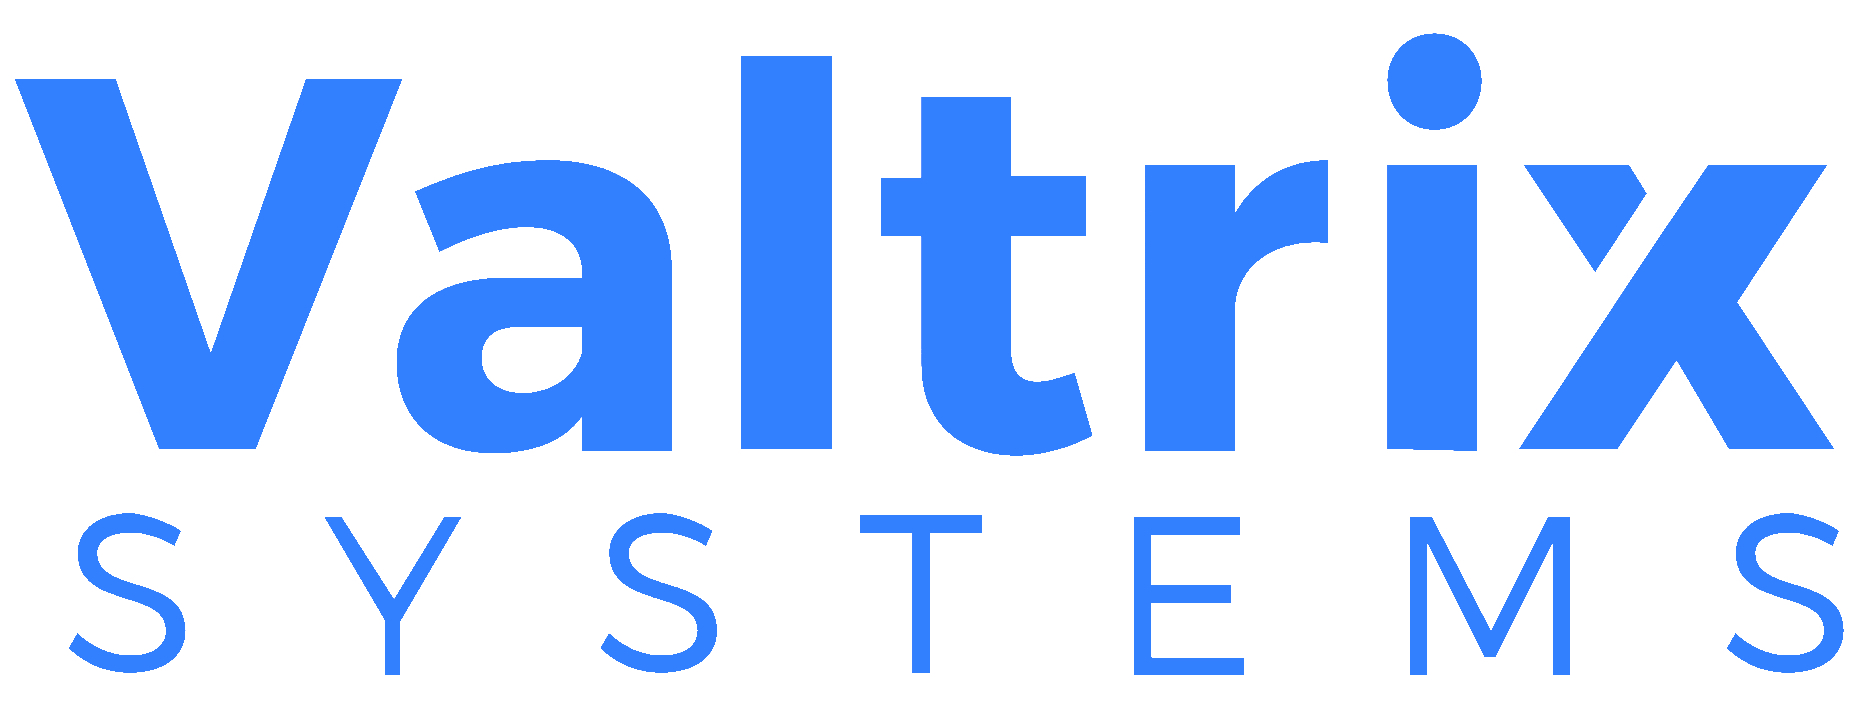 Valtrix Systems